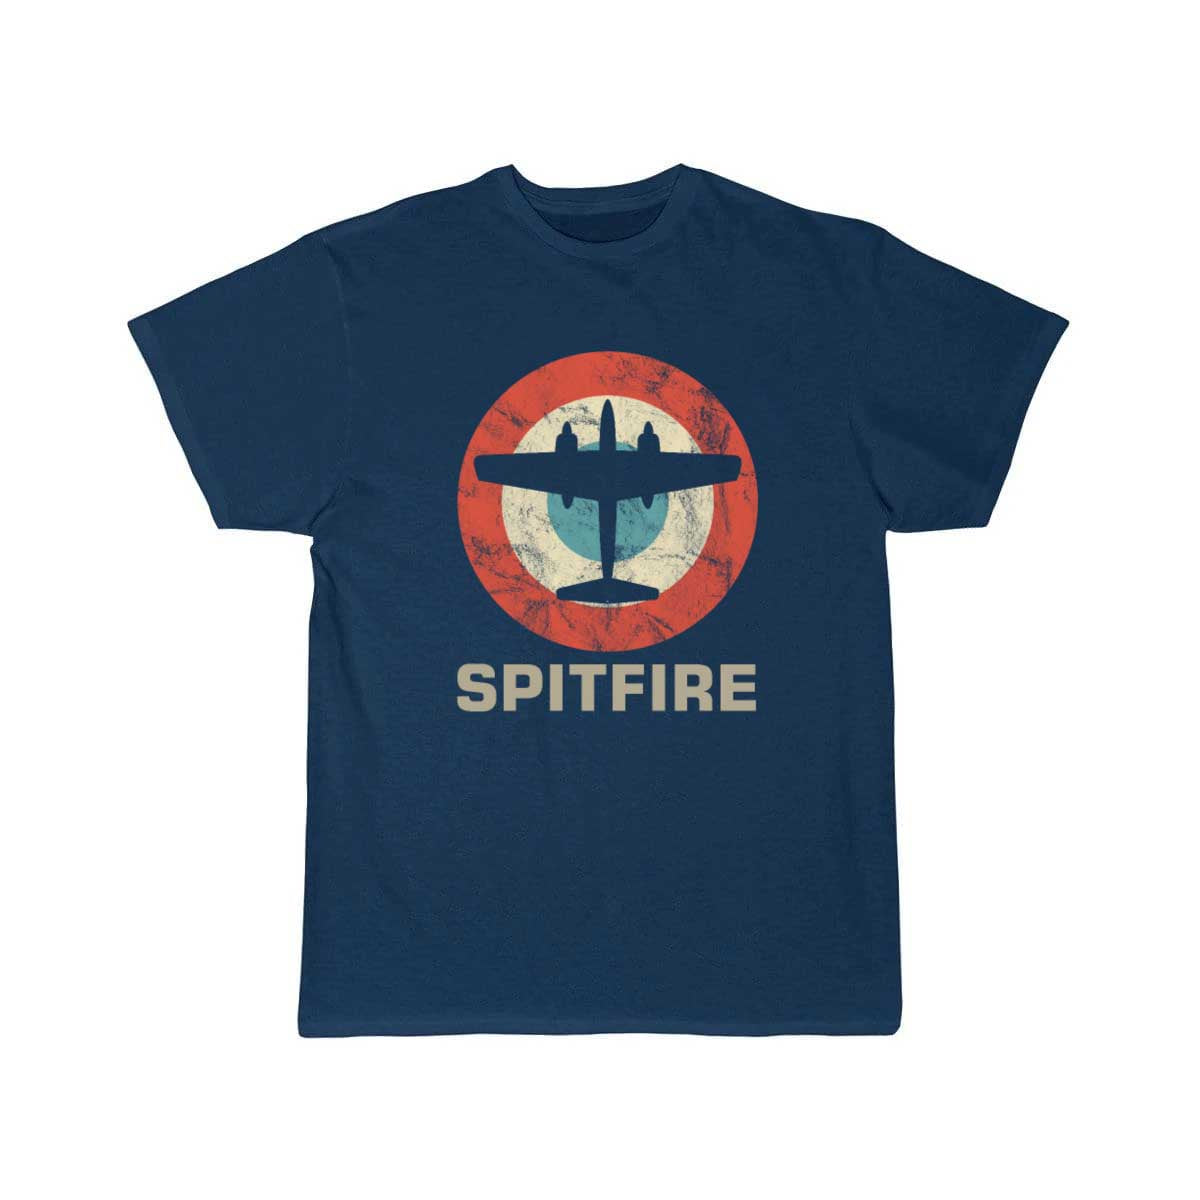 Spitfire Retro Vintage Jet Fighter Shooting Plane T Shirt THE AV8R